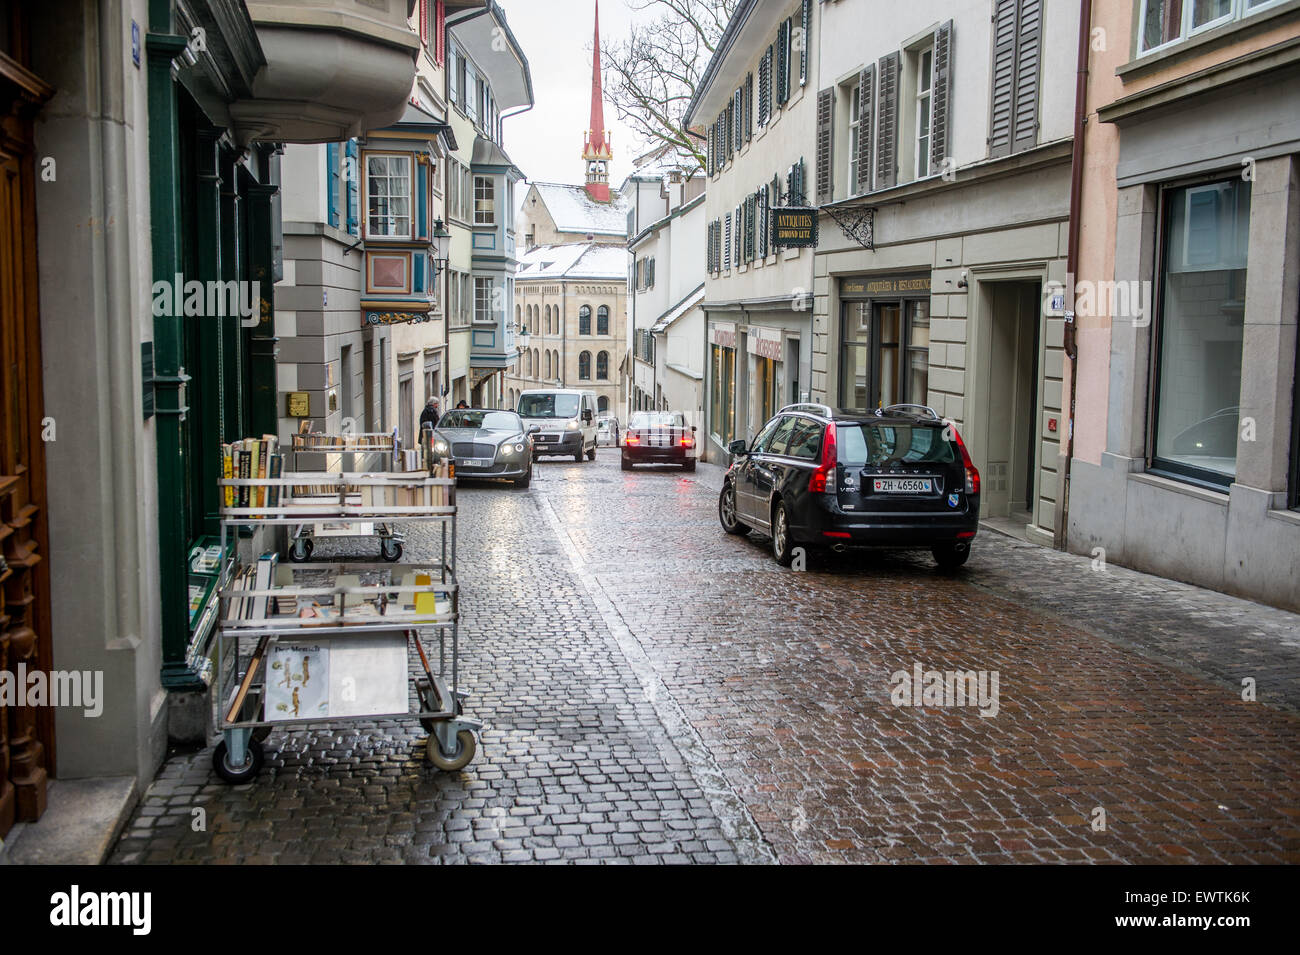 Shops along a cobblestone street in Zurich Switzerland, Europe Stock Photo